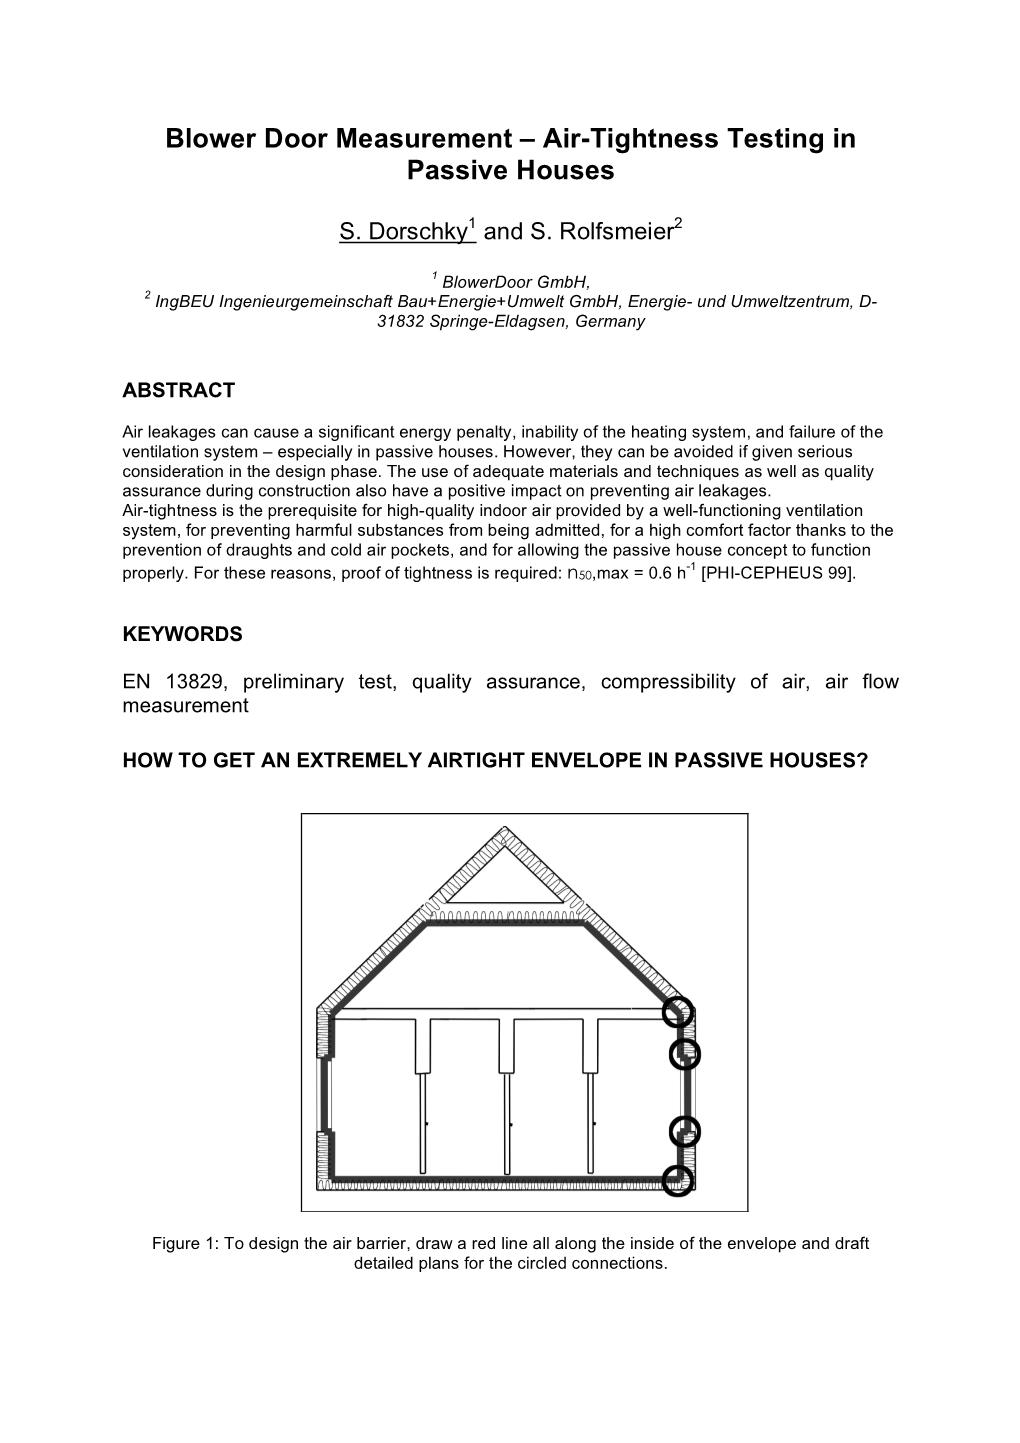 Blower Door Measurement – Air-Tightness Testing in Passive Houses